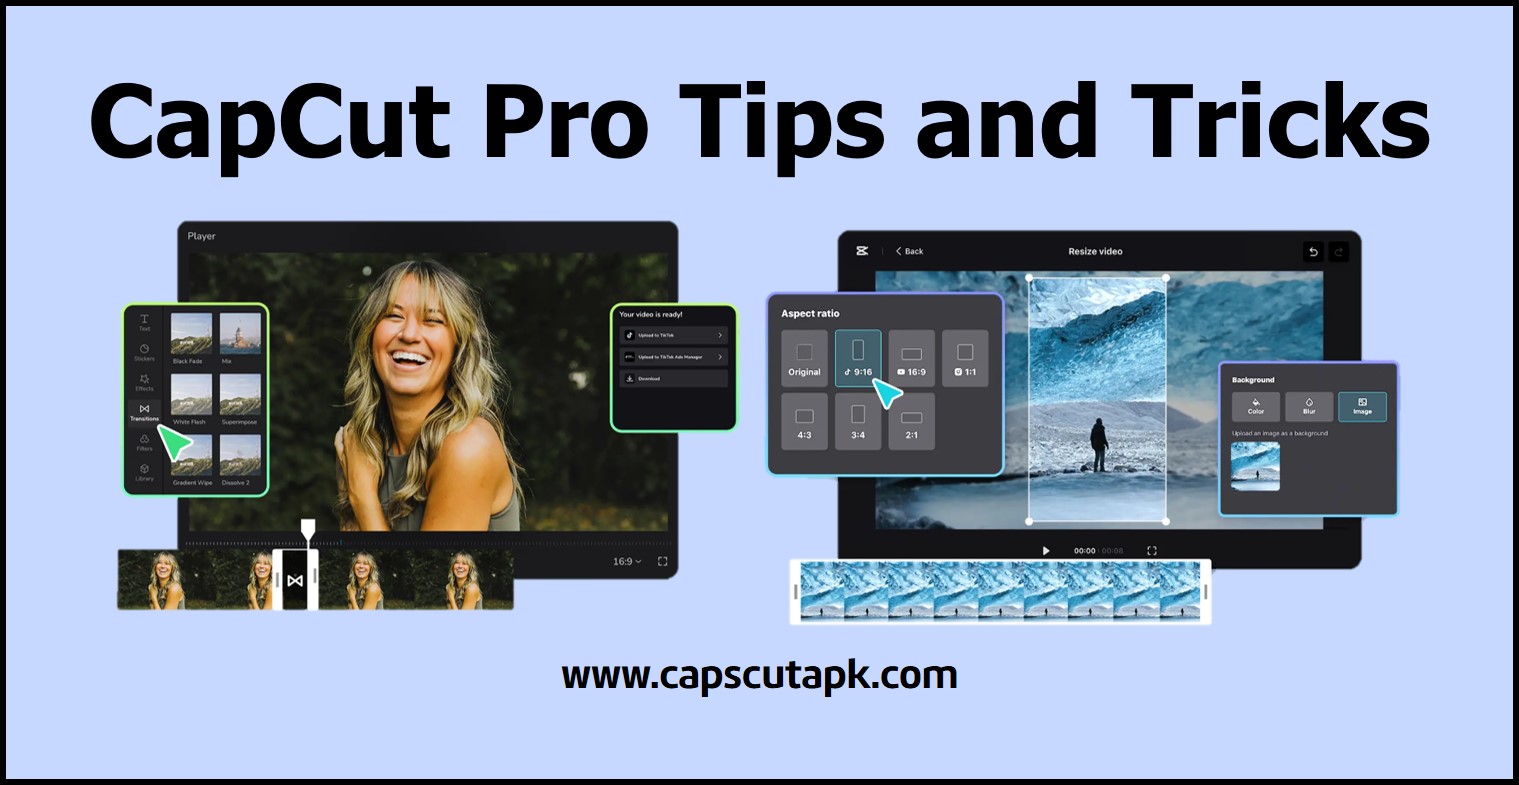 capcut pro tips and tricks